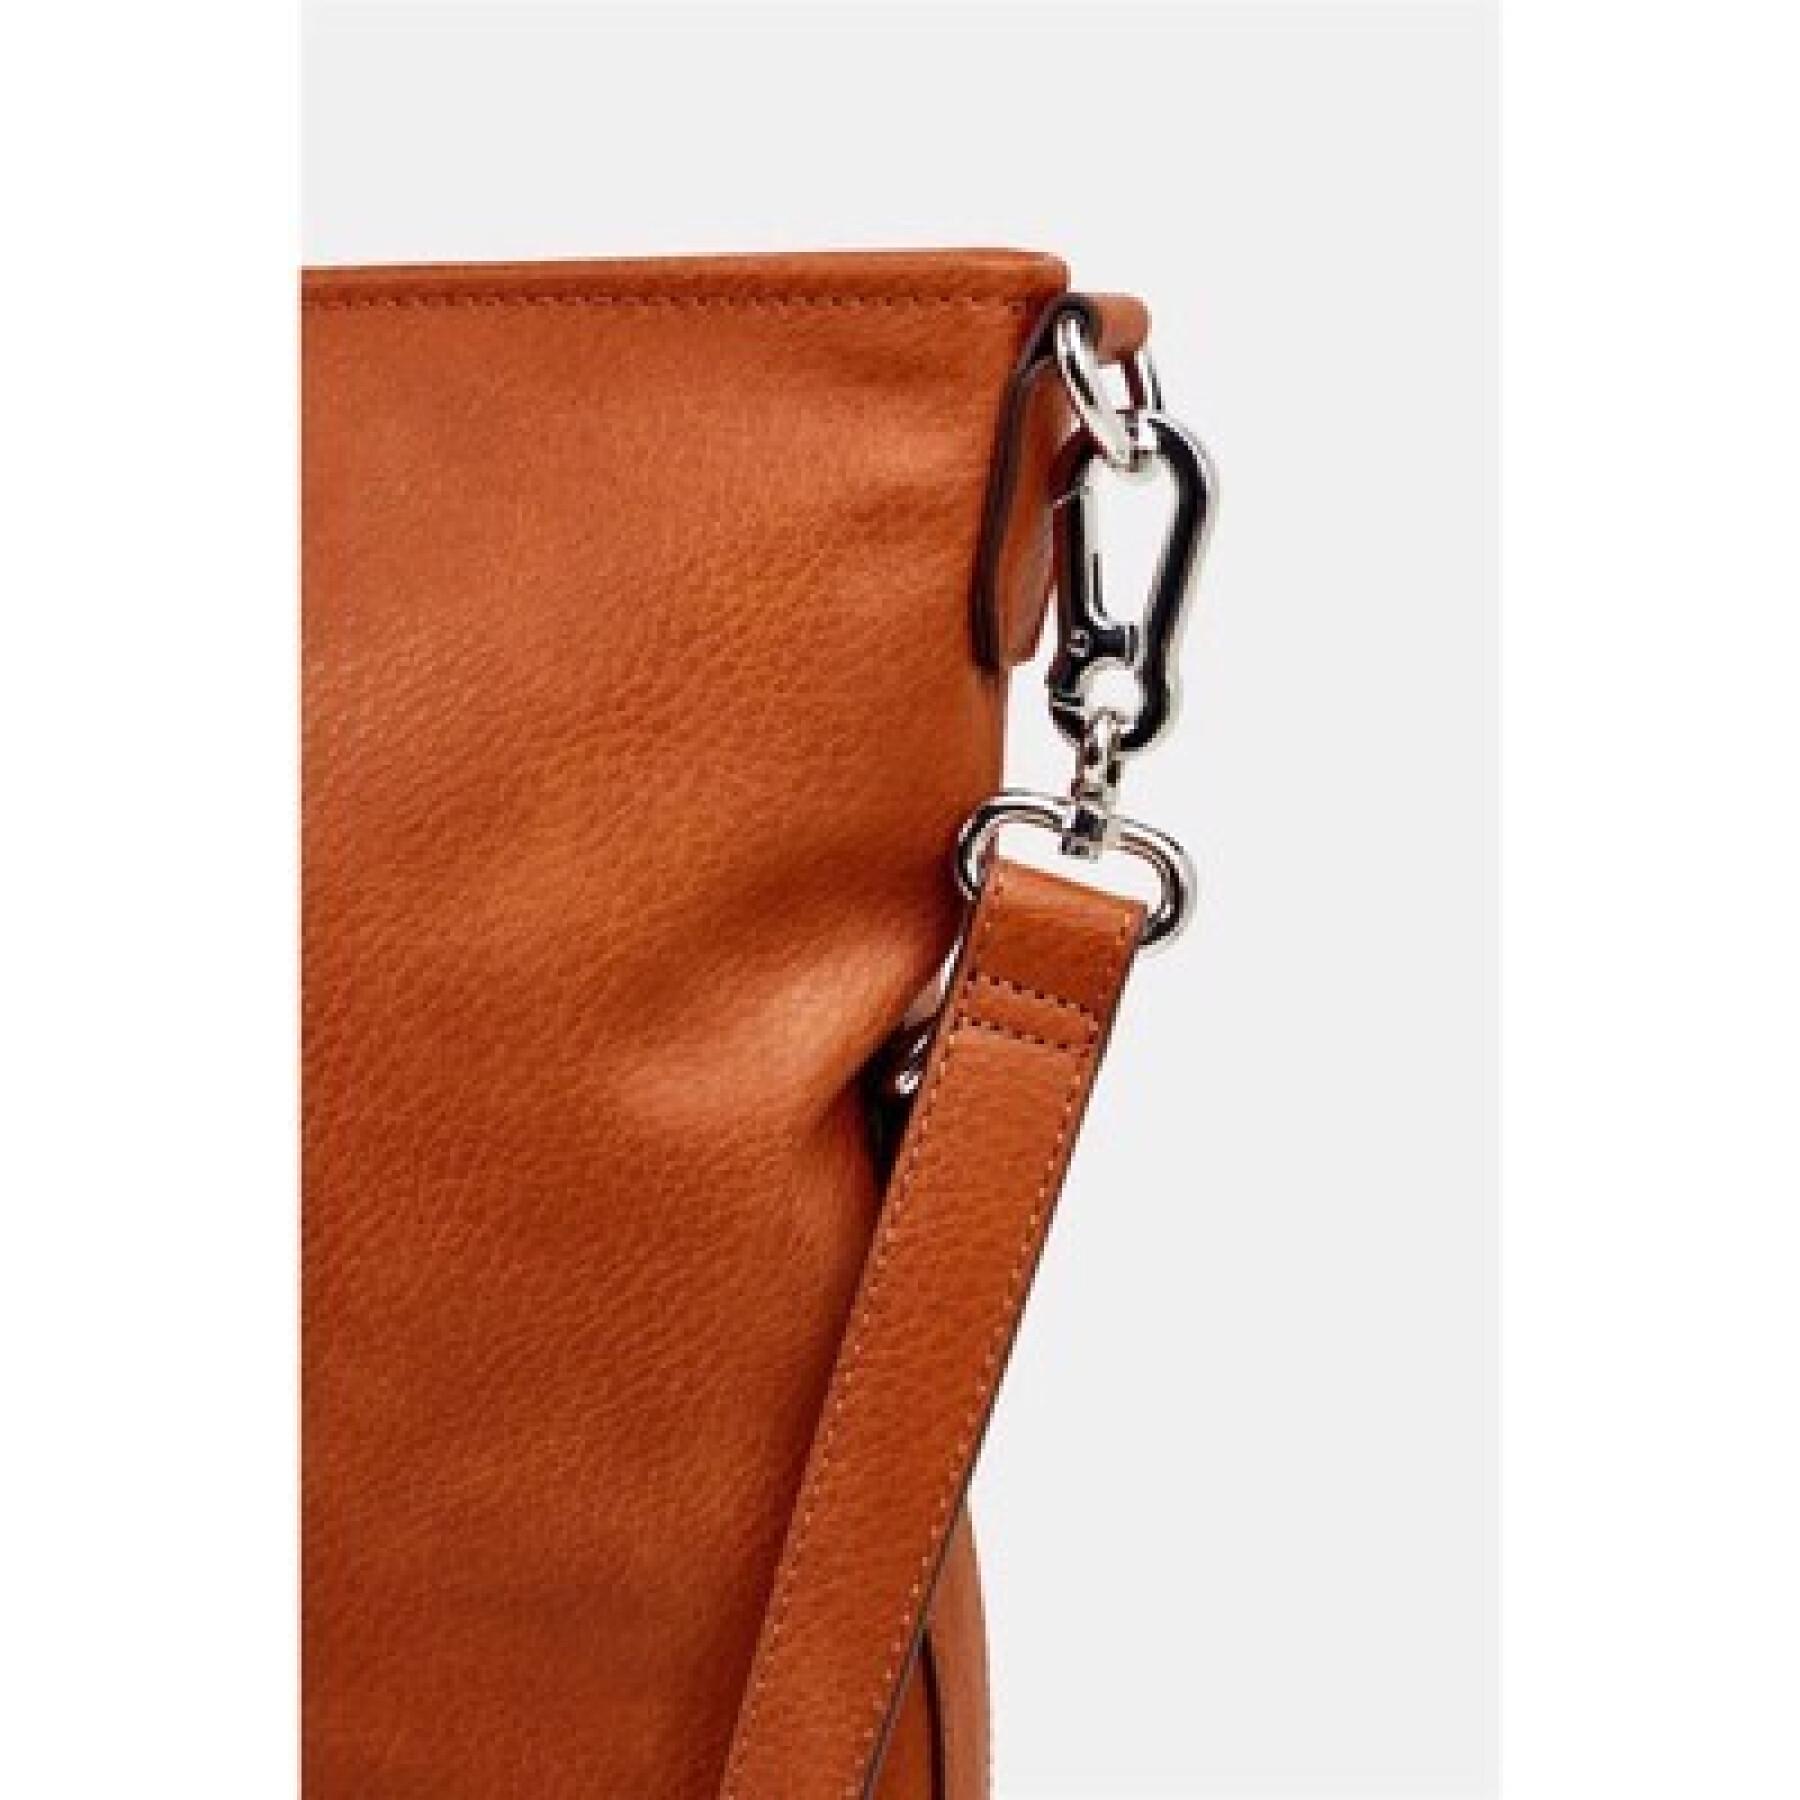 Faux leather shoulder bag for women Esprit